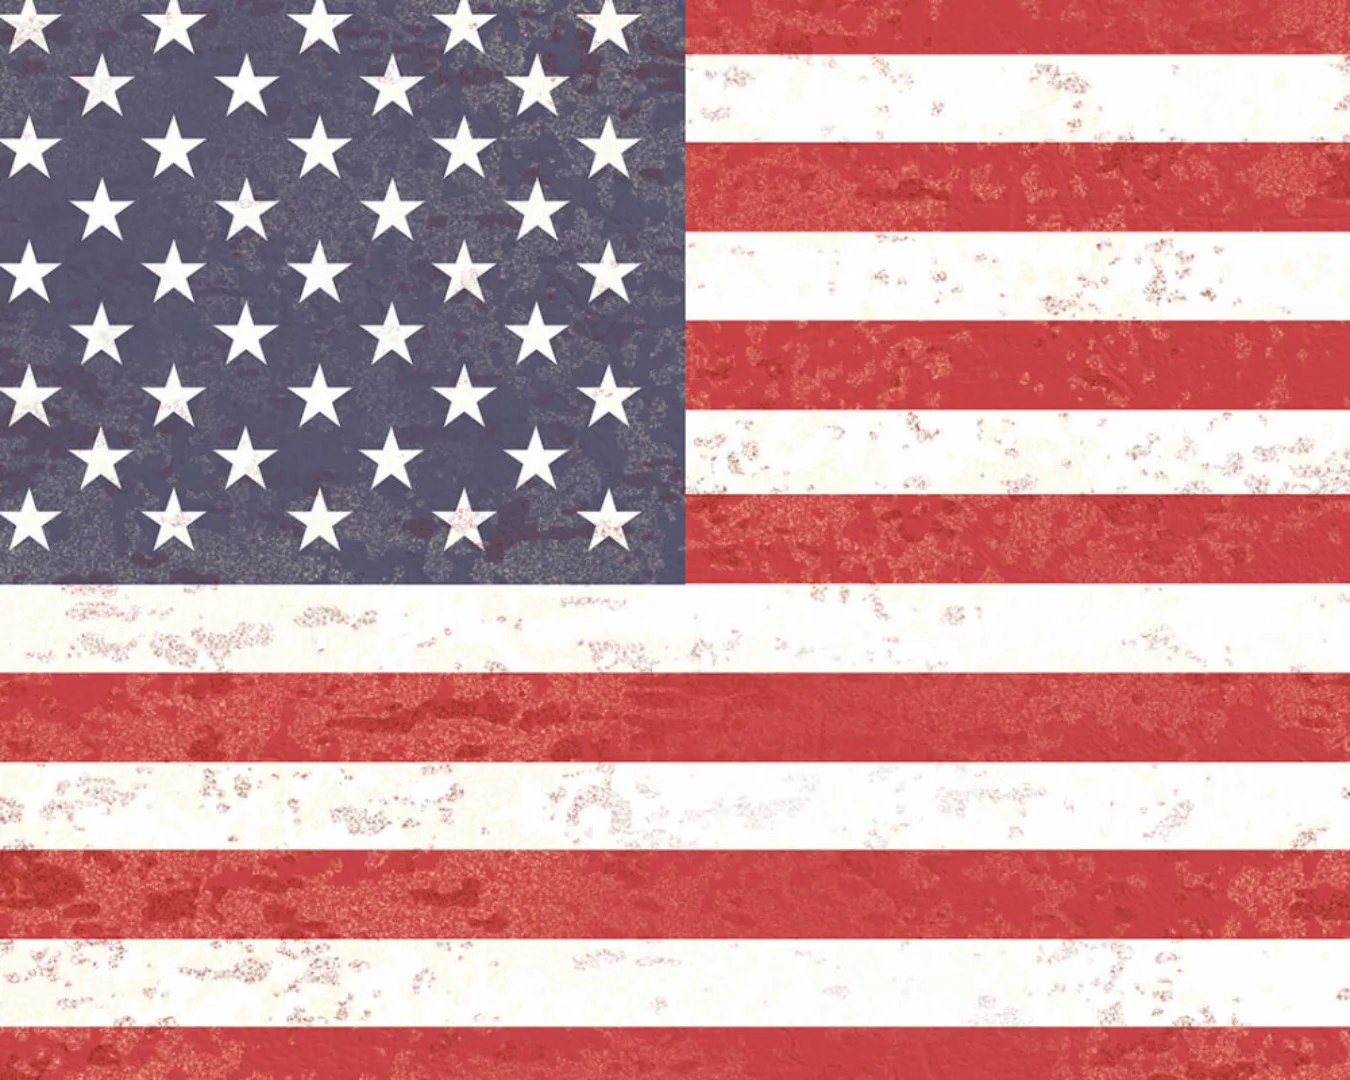 Fototapete "Amerika Flagge" 4,00x2,50 m / Strukturvlies Klassik günstig online kaufen